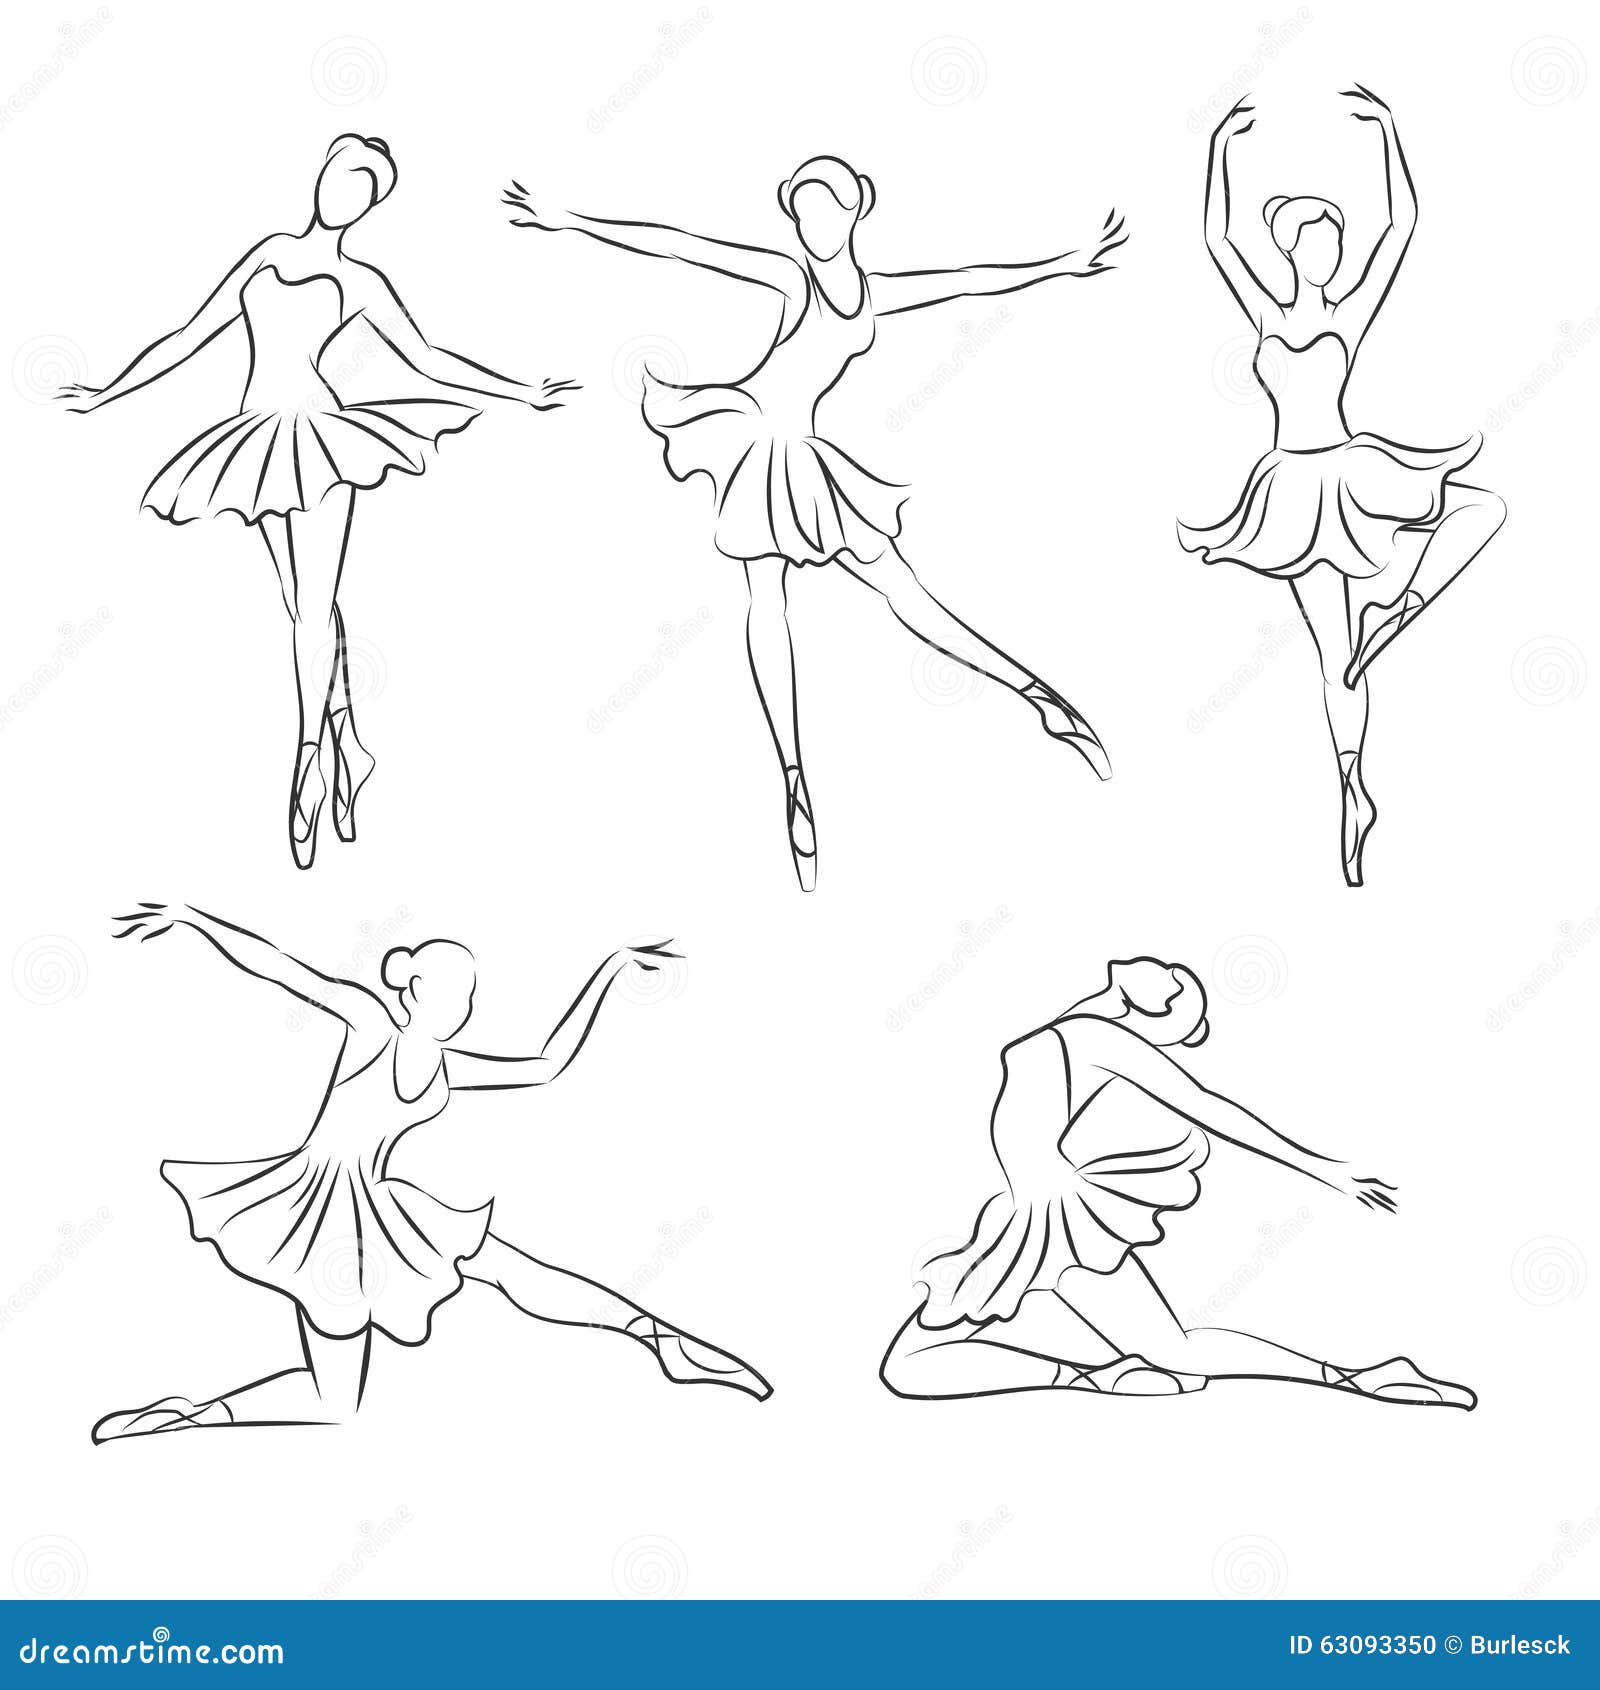 dance #drawing #춤 #1milliondancestudio | Dancing drawings, Art reference, Drawing  poses